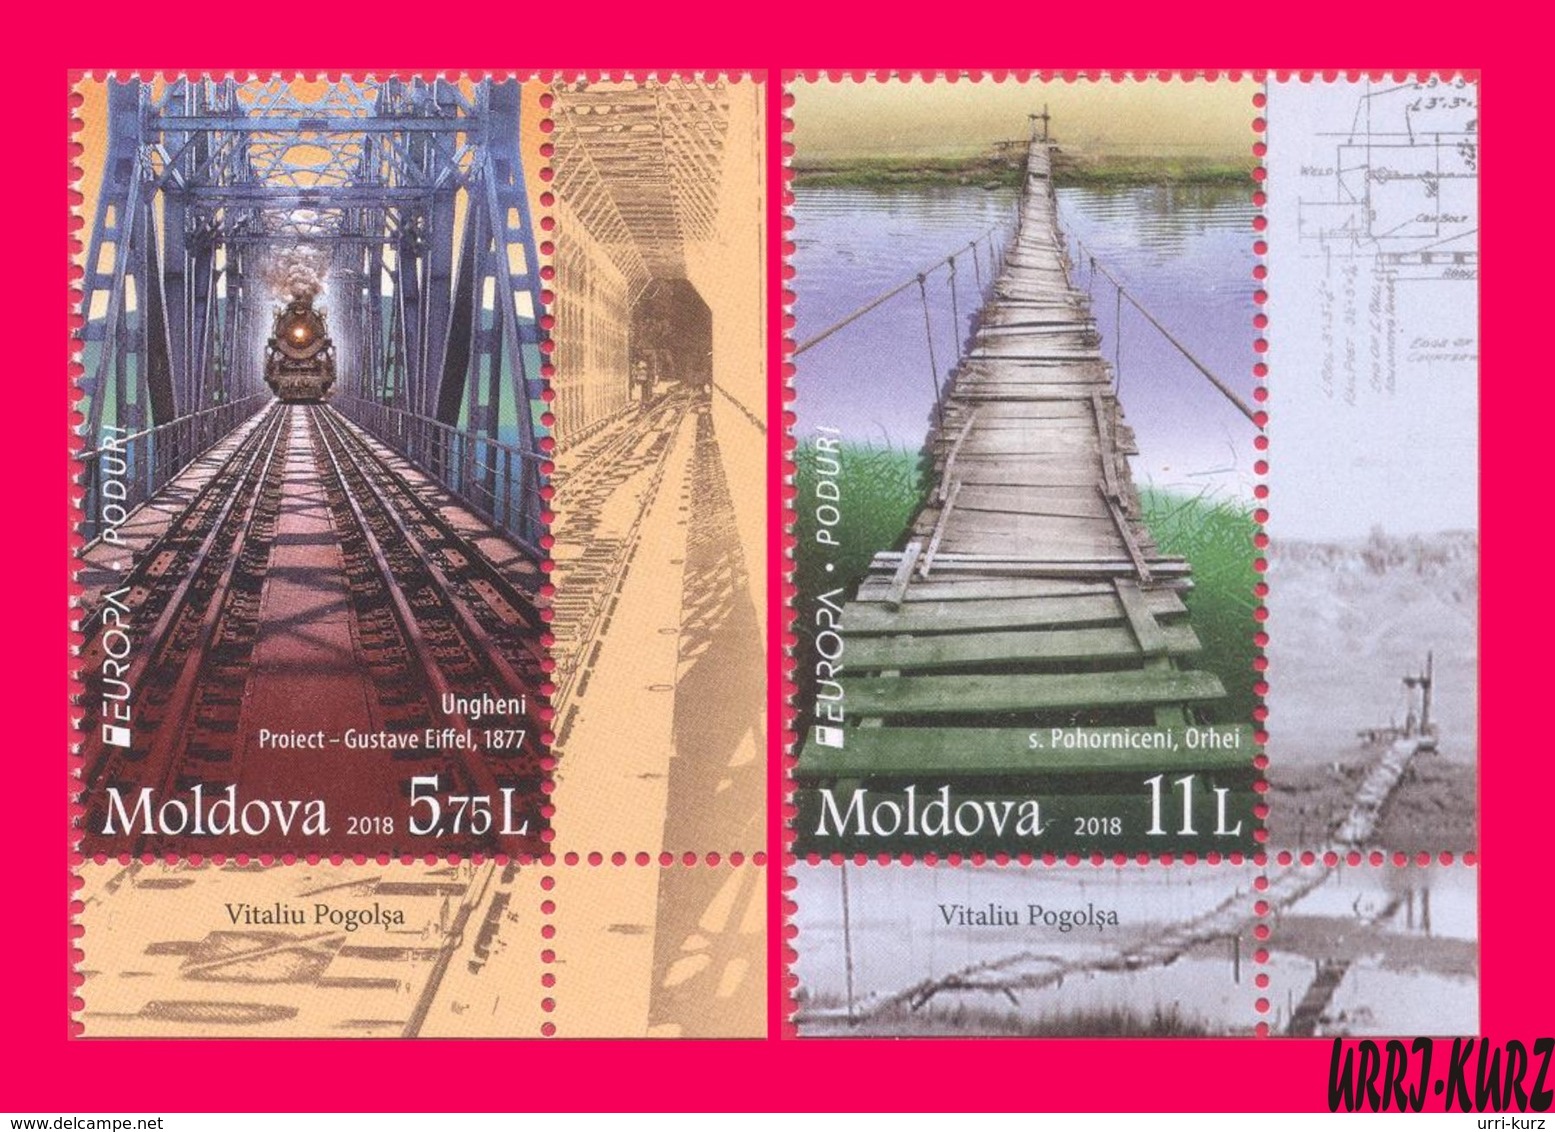 MOLDOVA 2018 Europa CEPT Bridges Eiffel Railway Bridge & Wooden Bridge 2v Mi1031-1032 Sc969-970 MNH - Moldawien (Moldau)